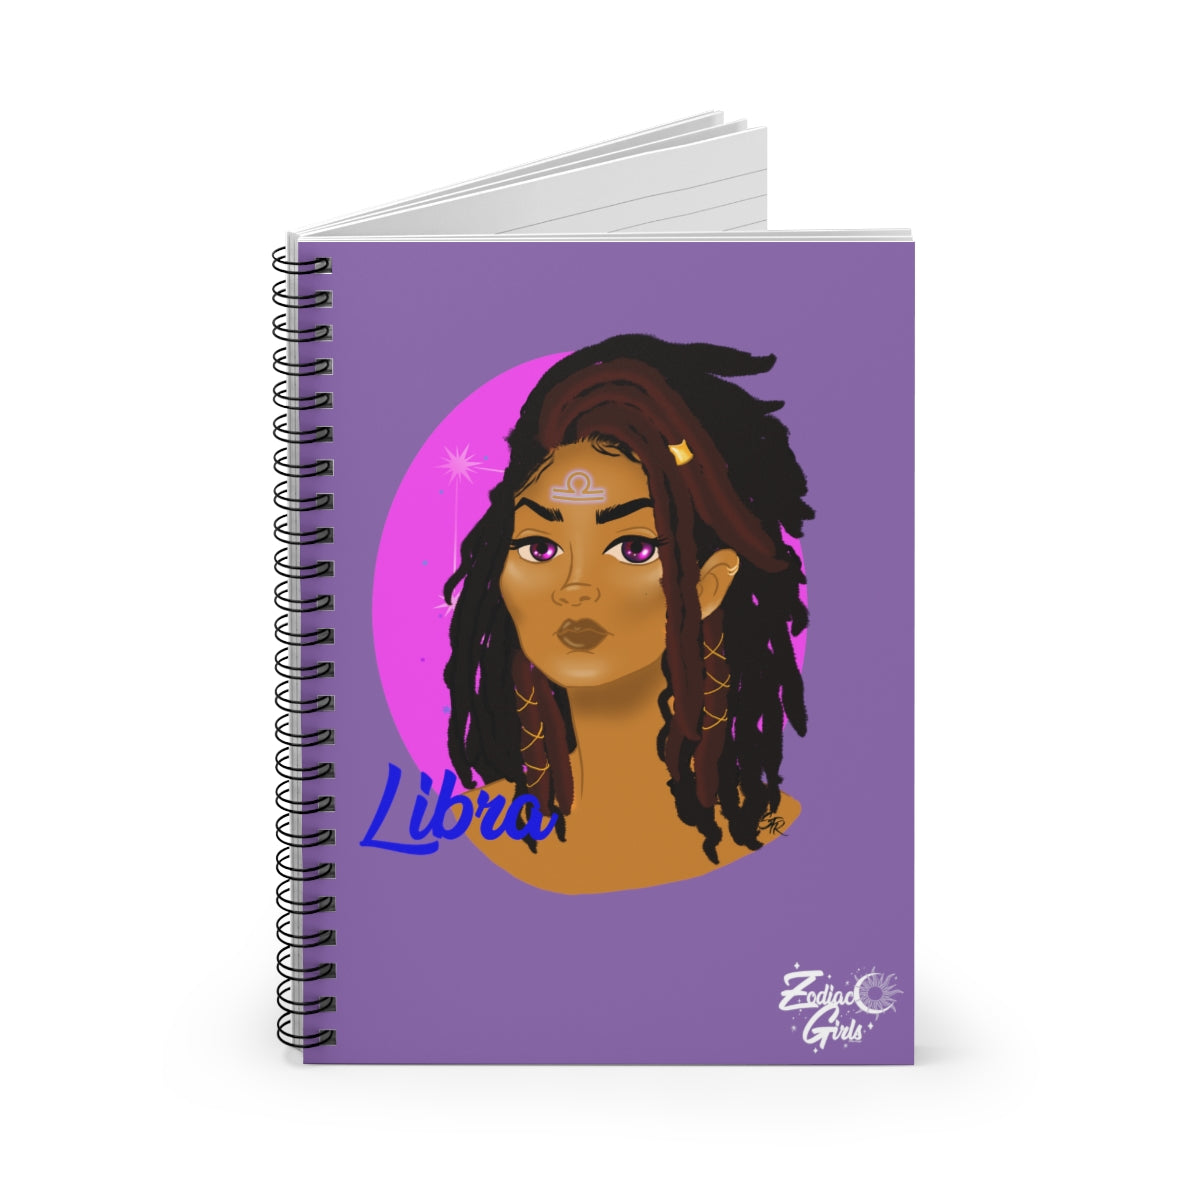 Zodiac Girls Libra Spiral Notebook - Ruled Line